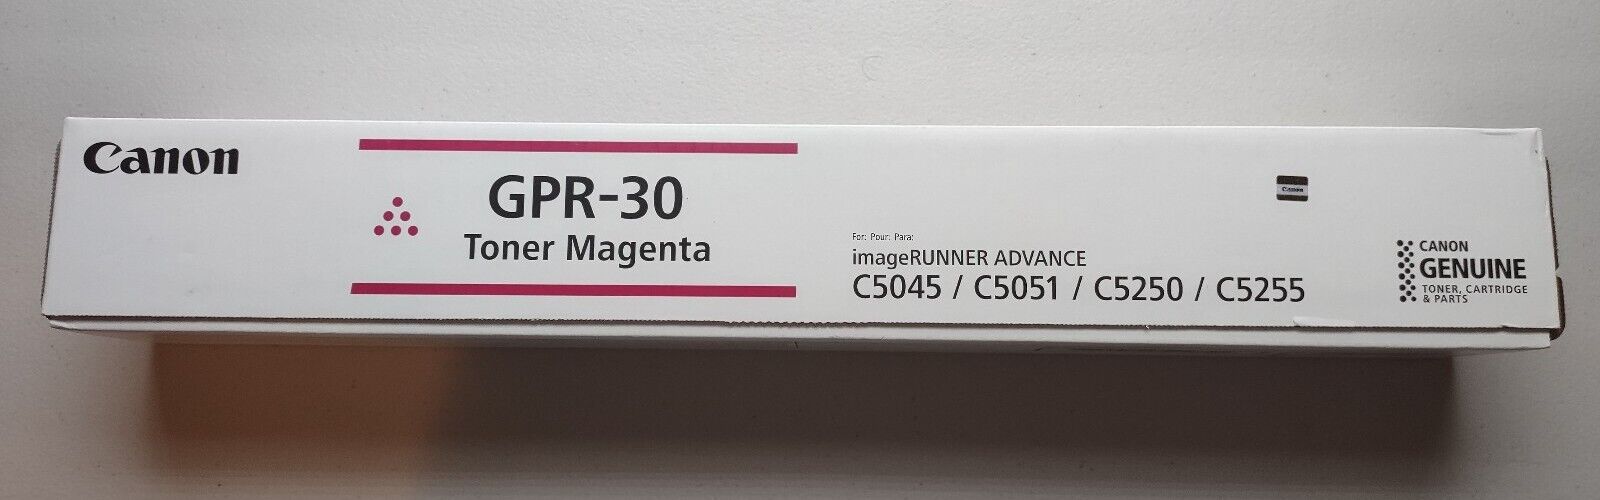 New Sealed Genuine Canon GPR-30 (2797B003[AC]) Magenta Toner Cartridge